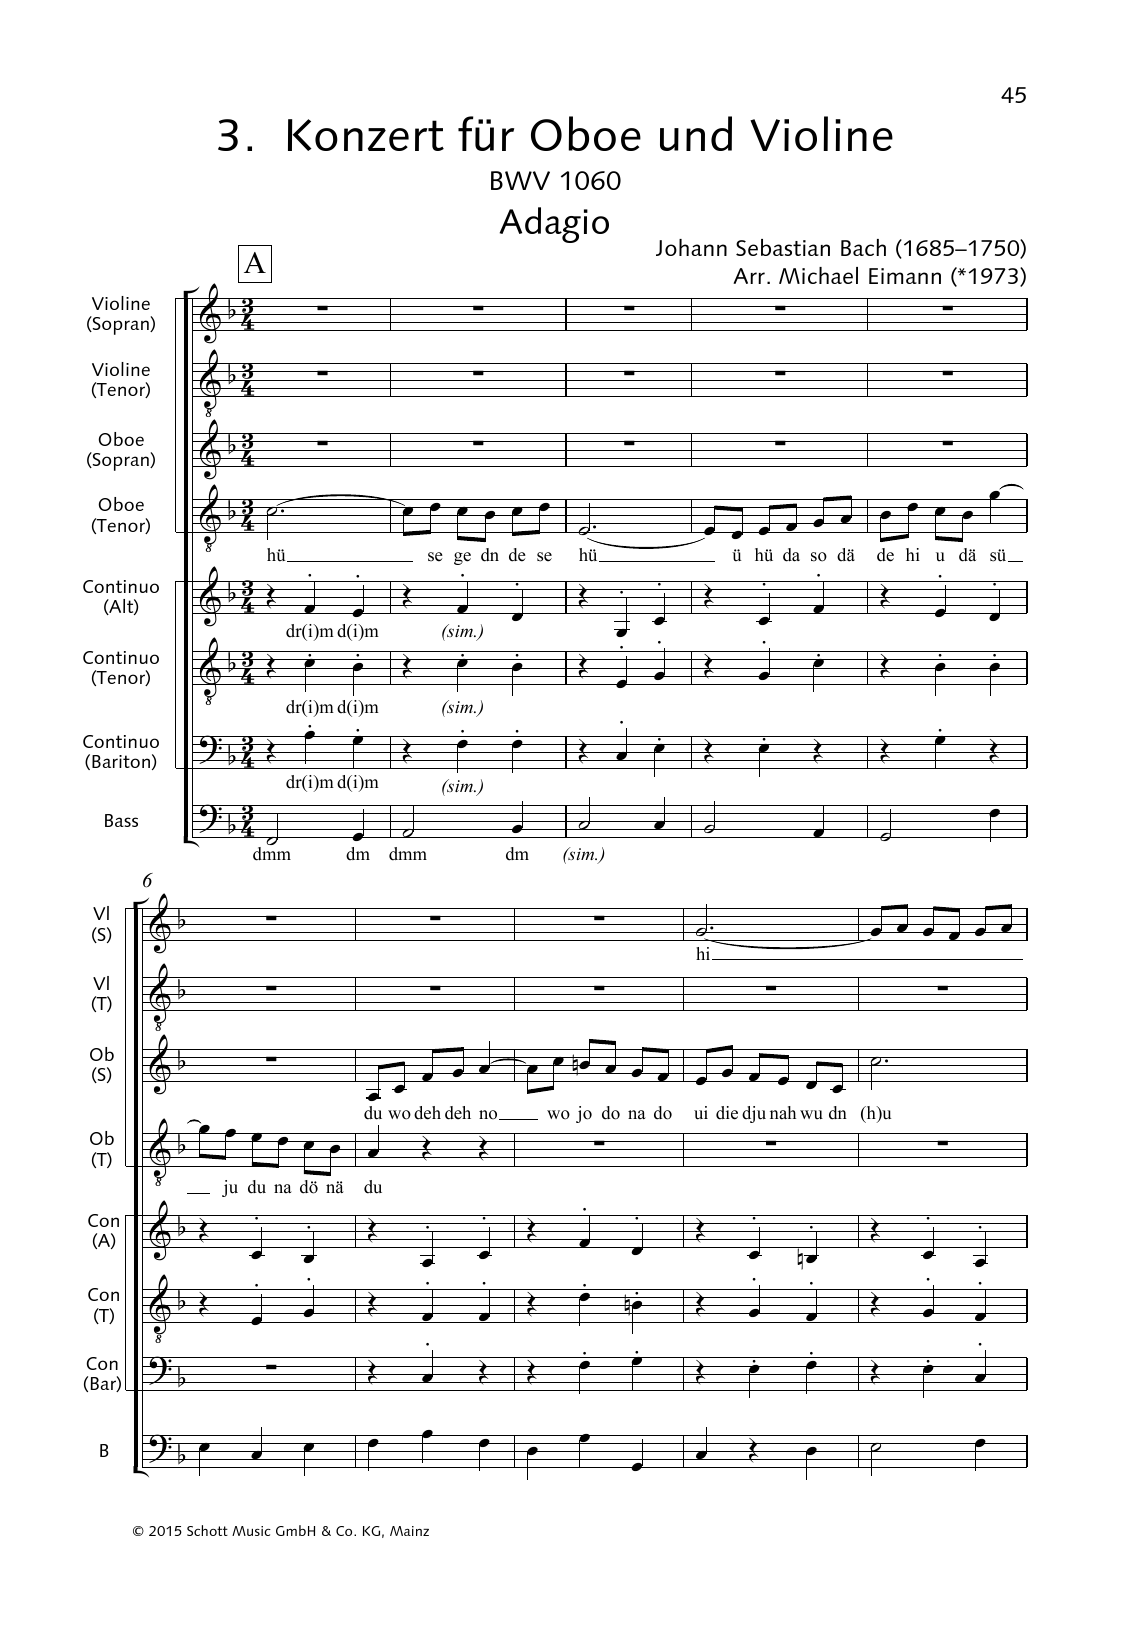 Download Johann Sebastian Bach Concerto for Oboe and Violin (Adagio) Sheet Music